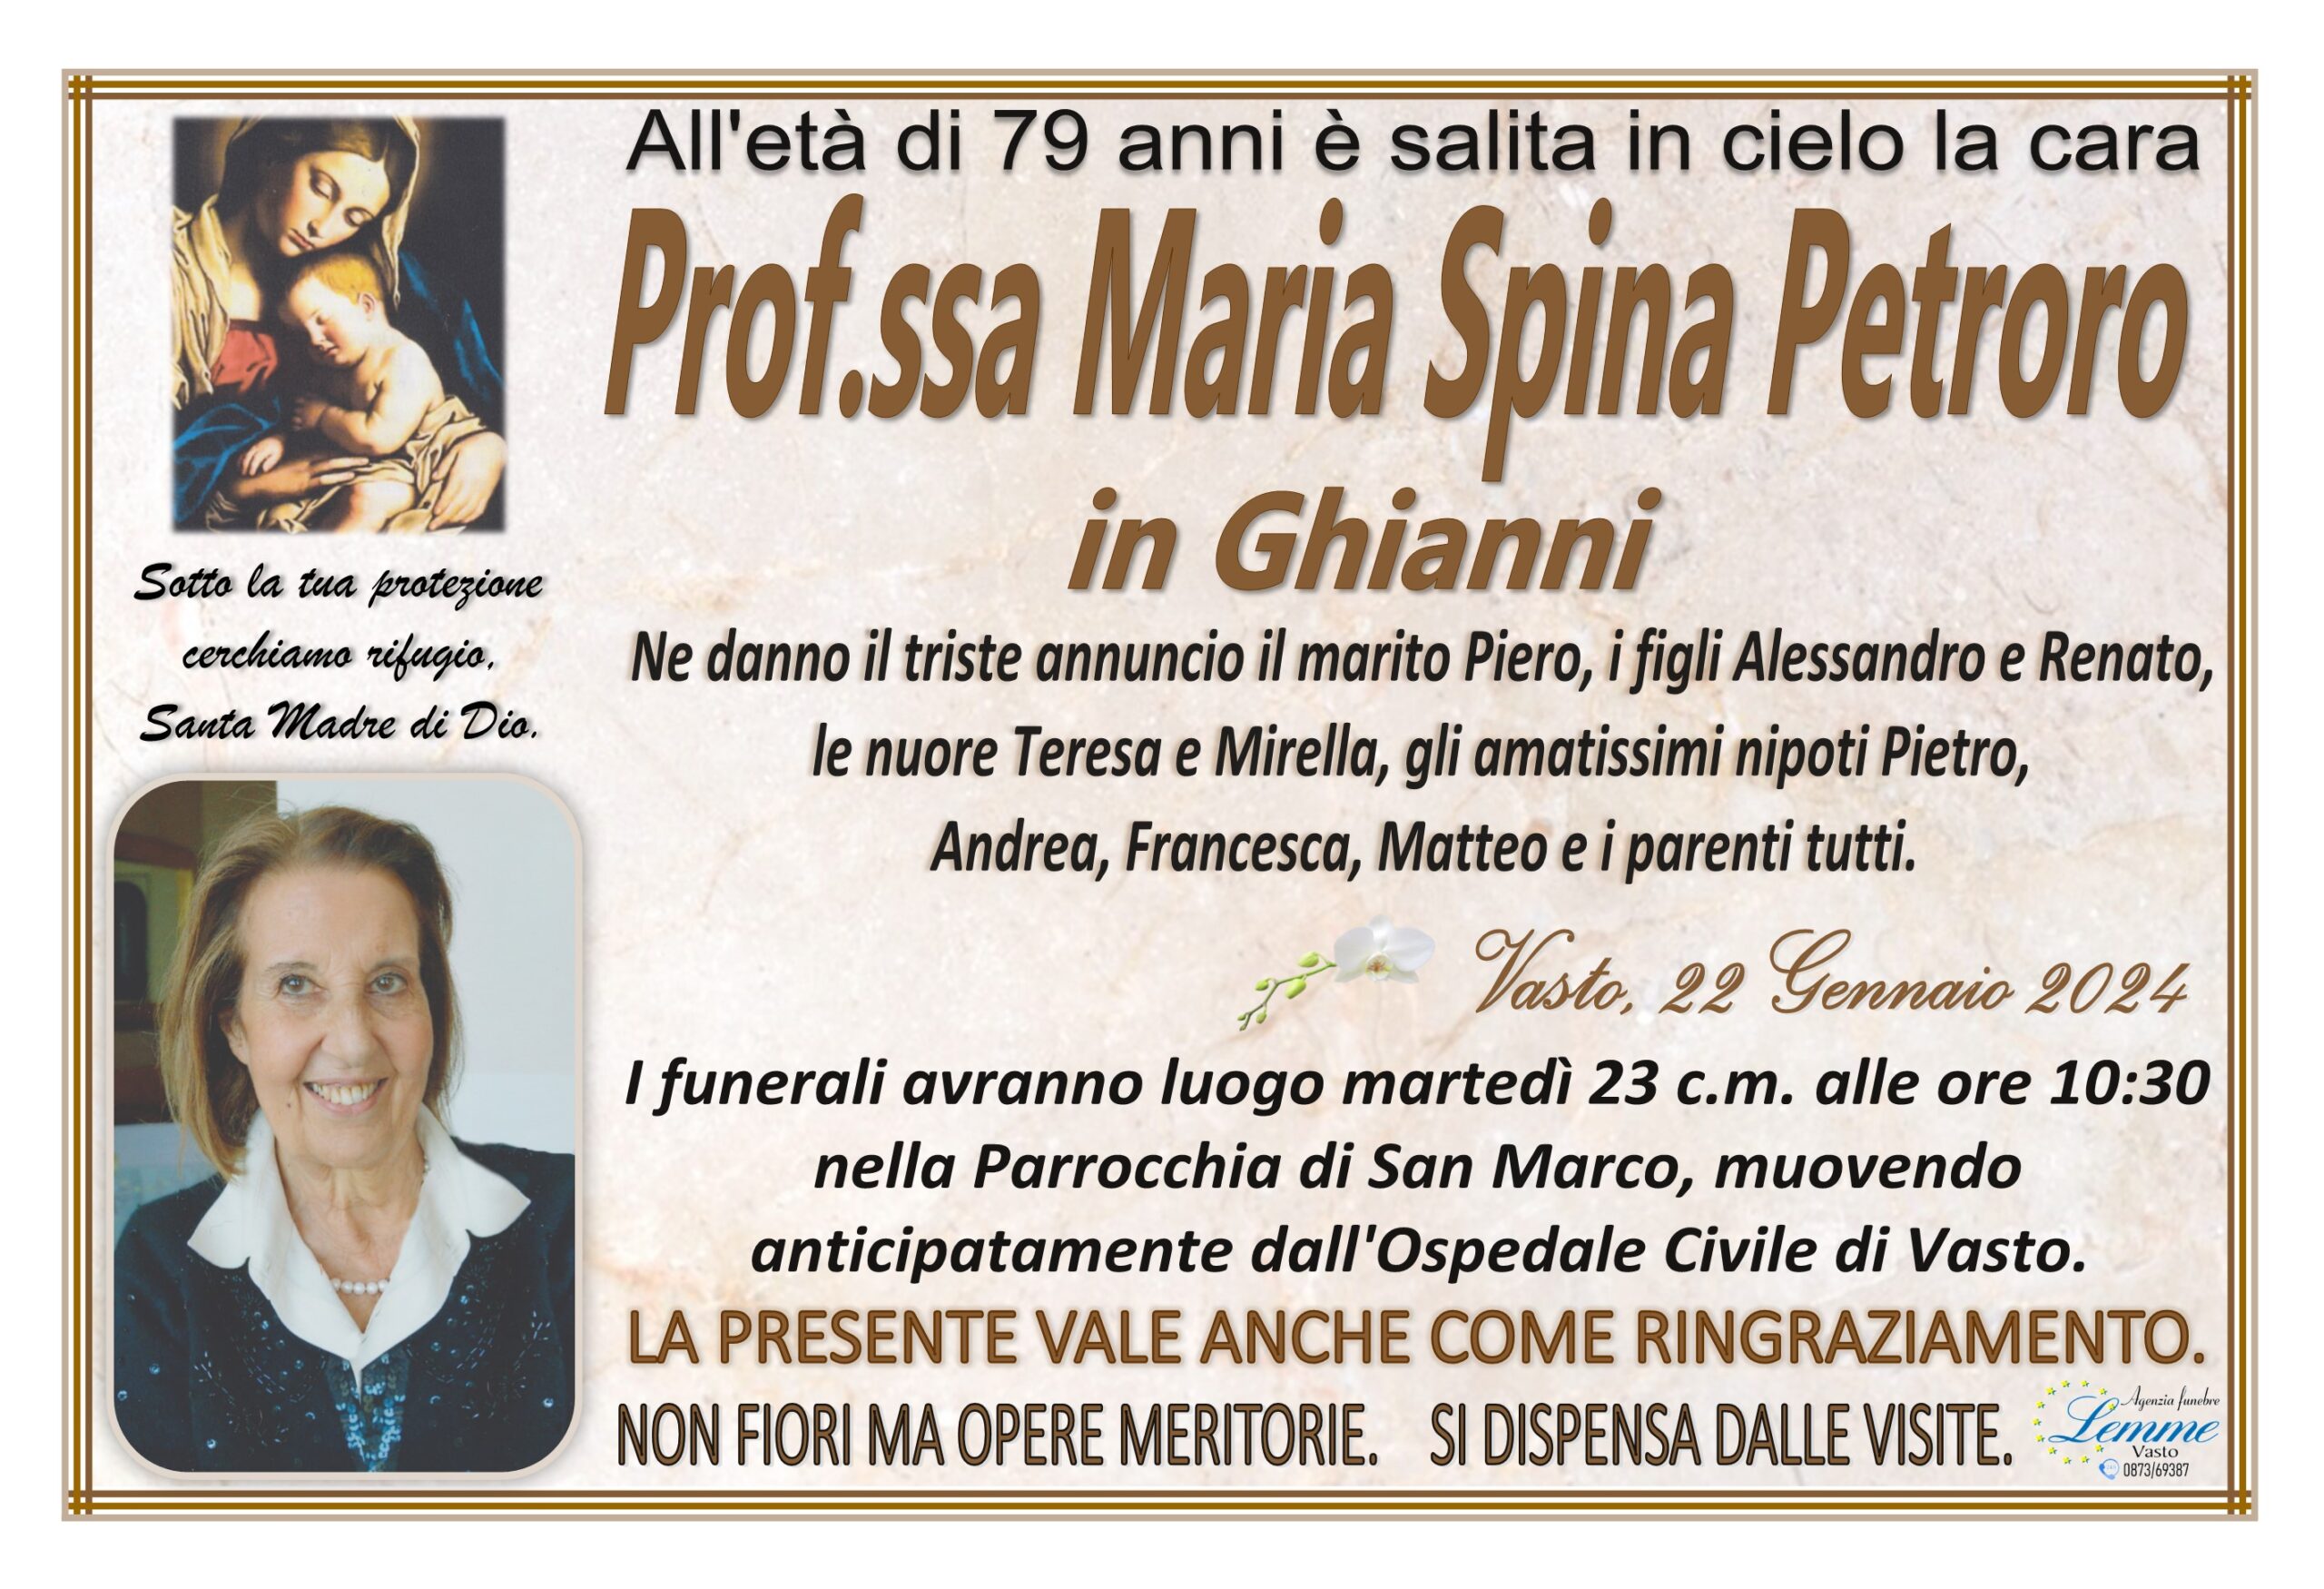 Prof.ssa Maria Spina Petroro